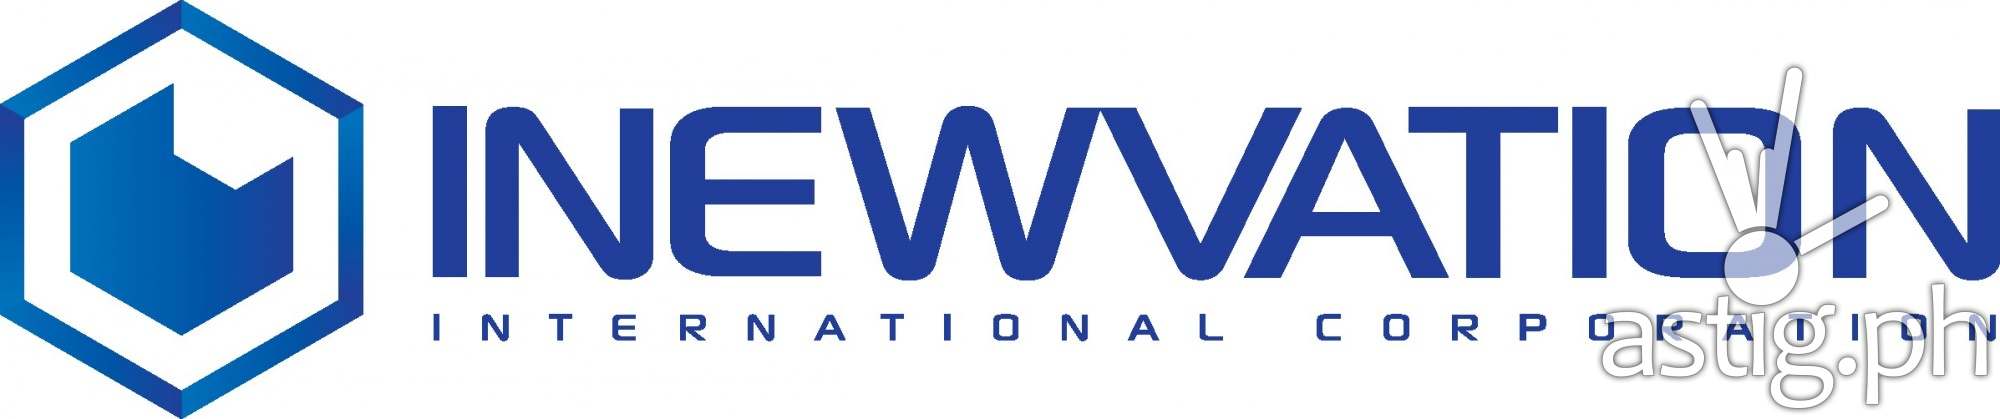 Inewvation International Corp Logo (3D)-01